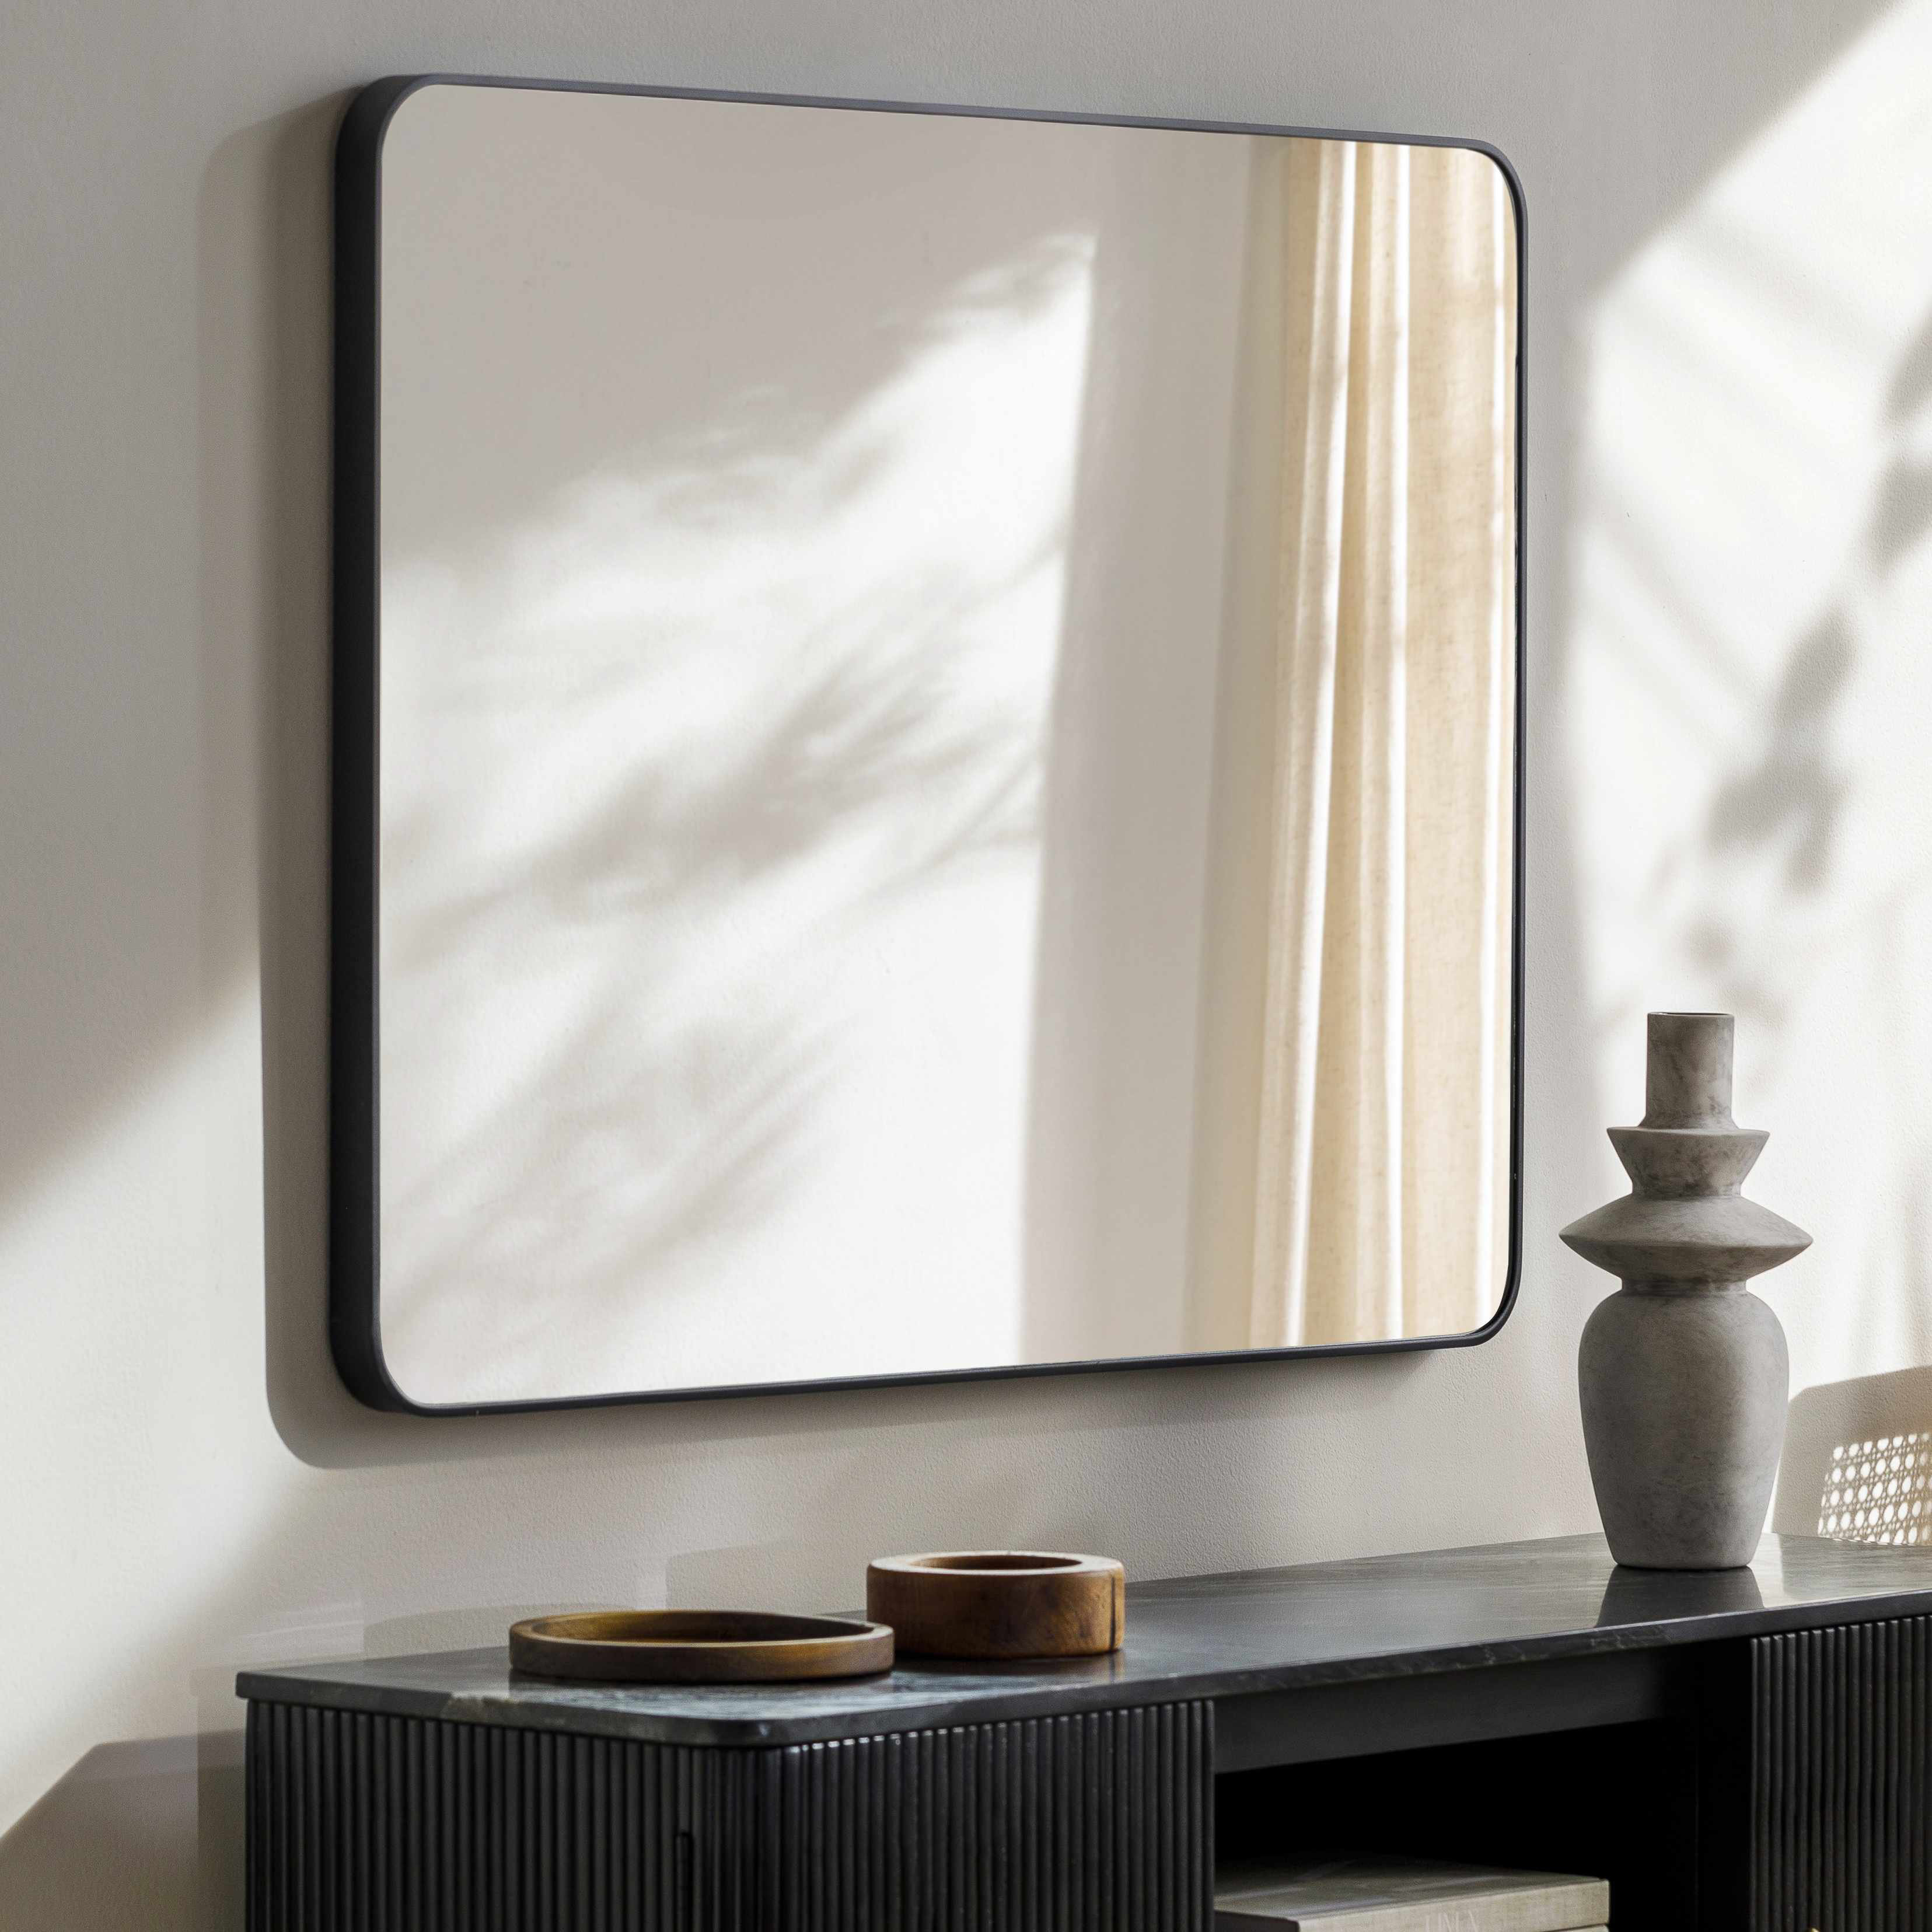 Destefano Metal Rectangle Wall Mirror Willa Arlo Interiors Size: 41 x 30 Finish: Black